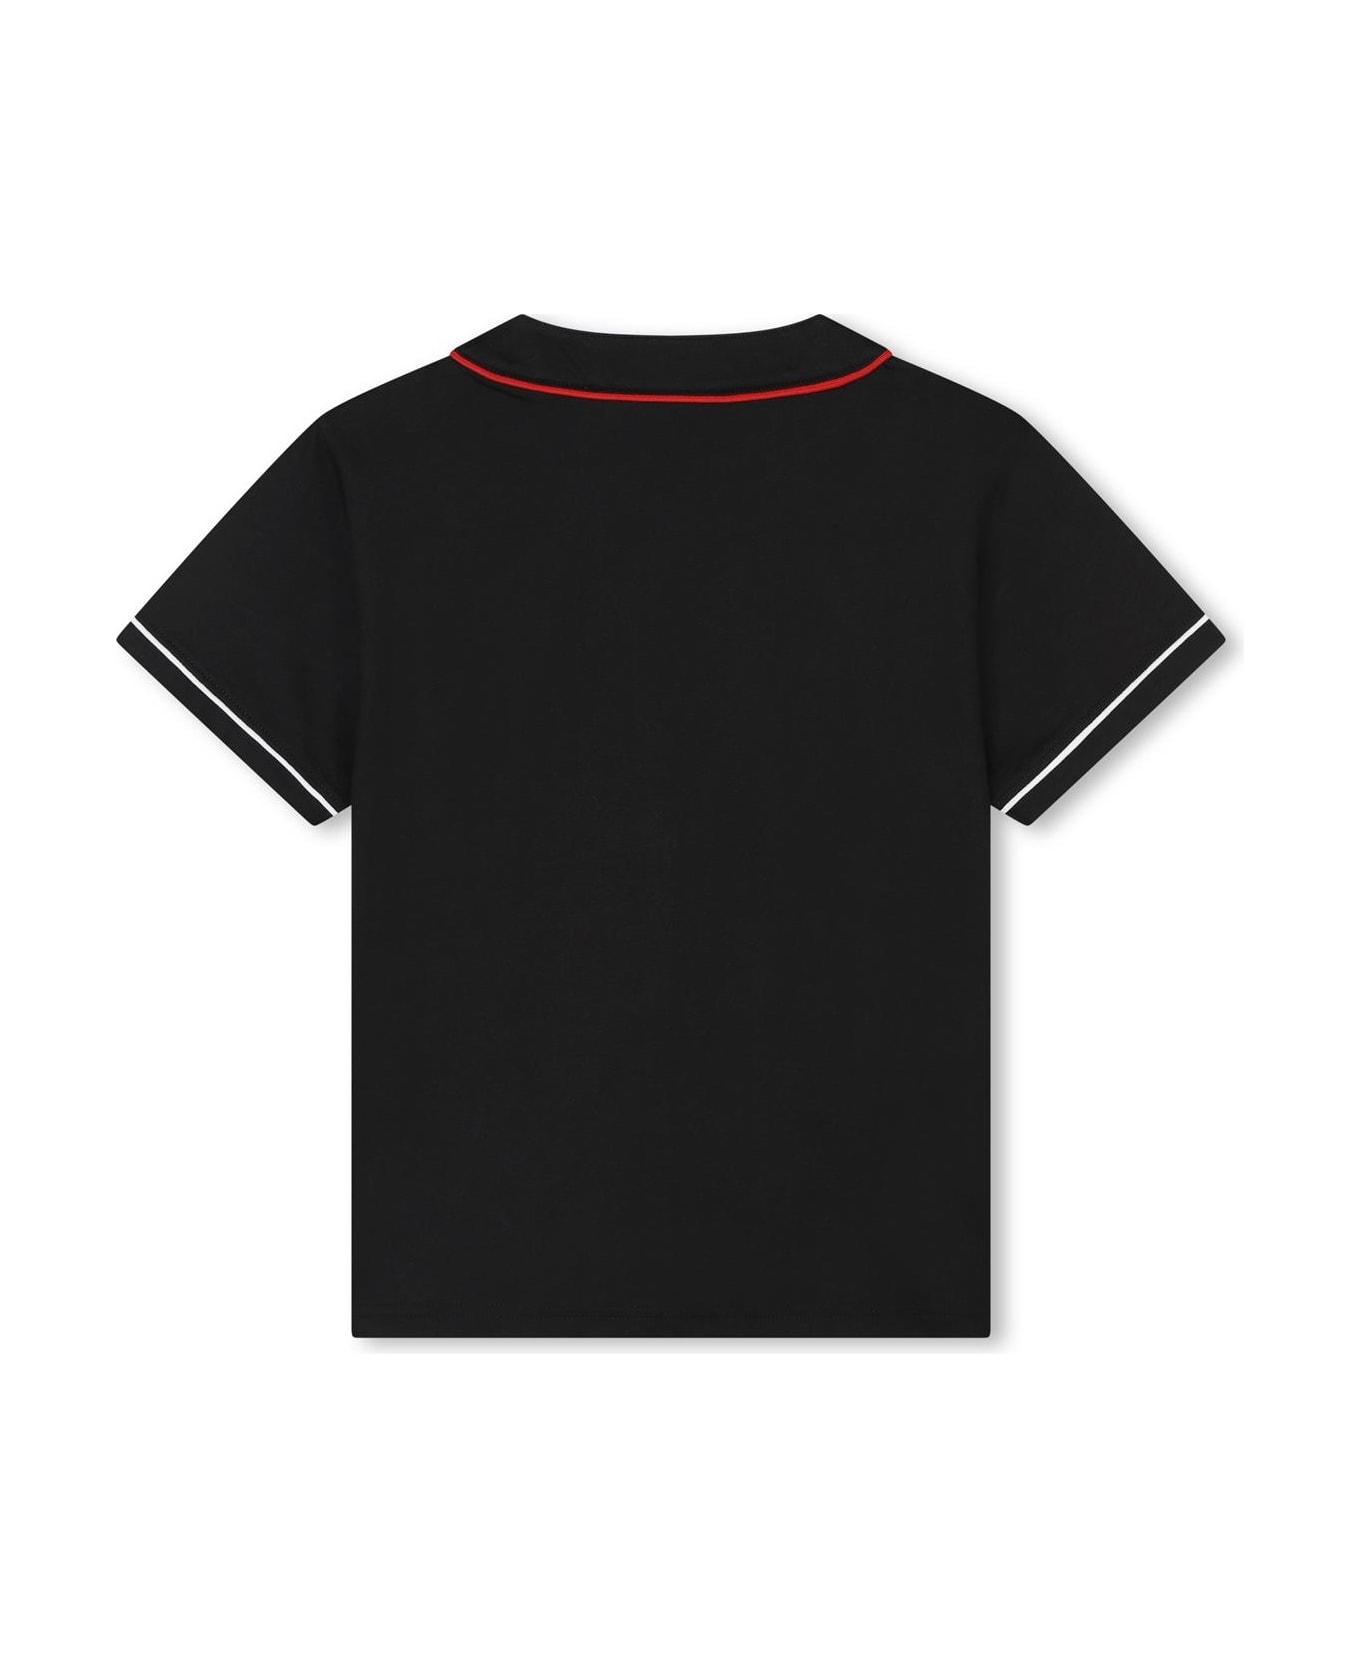 Hugo Boss Shirt With Print - Black